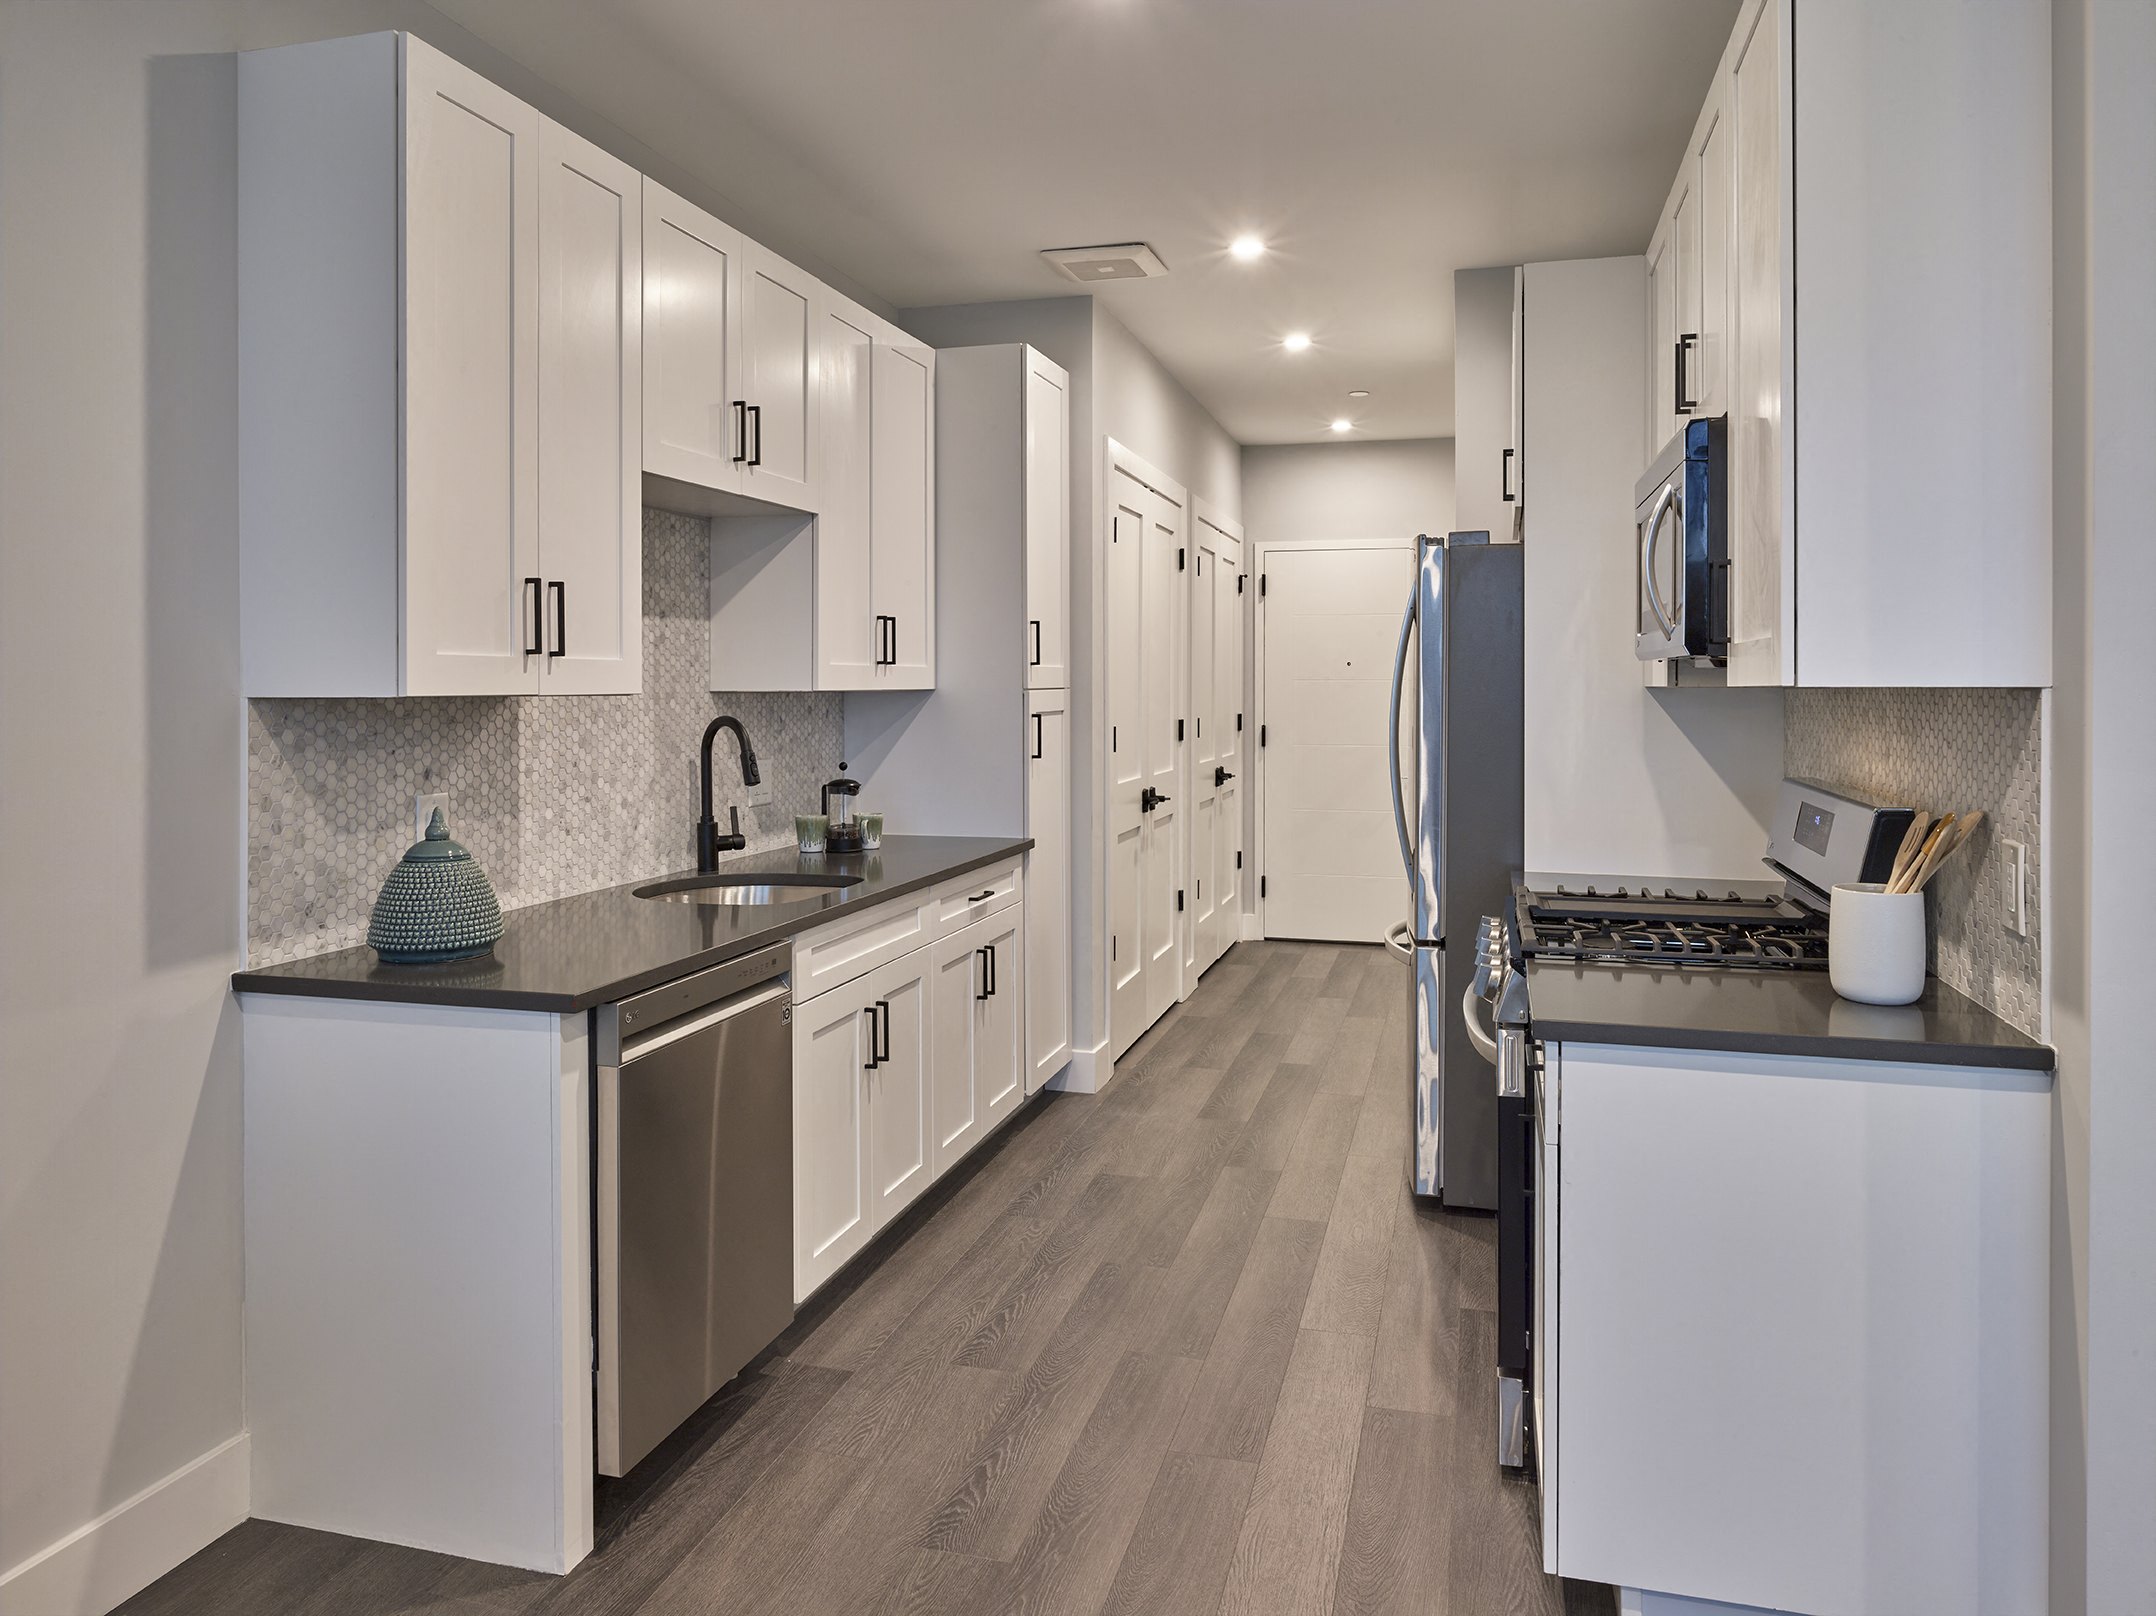 spacious kitchen, full size appliances, stainless steel appliances, hardwood flooring